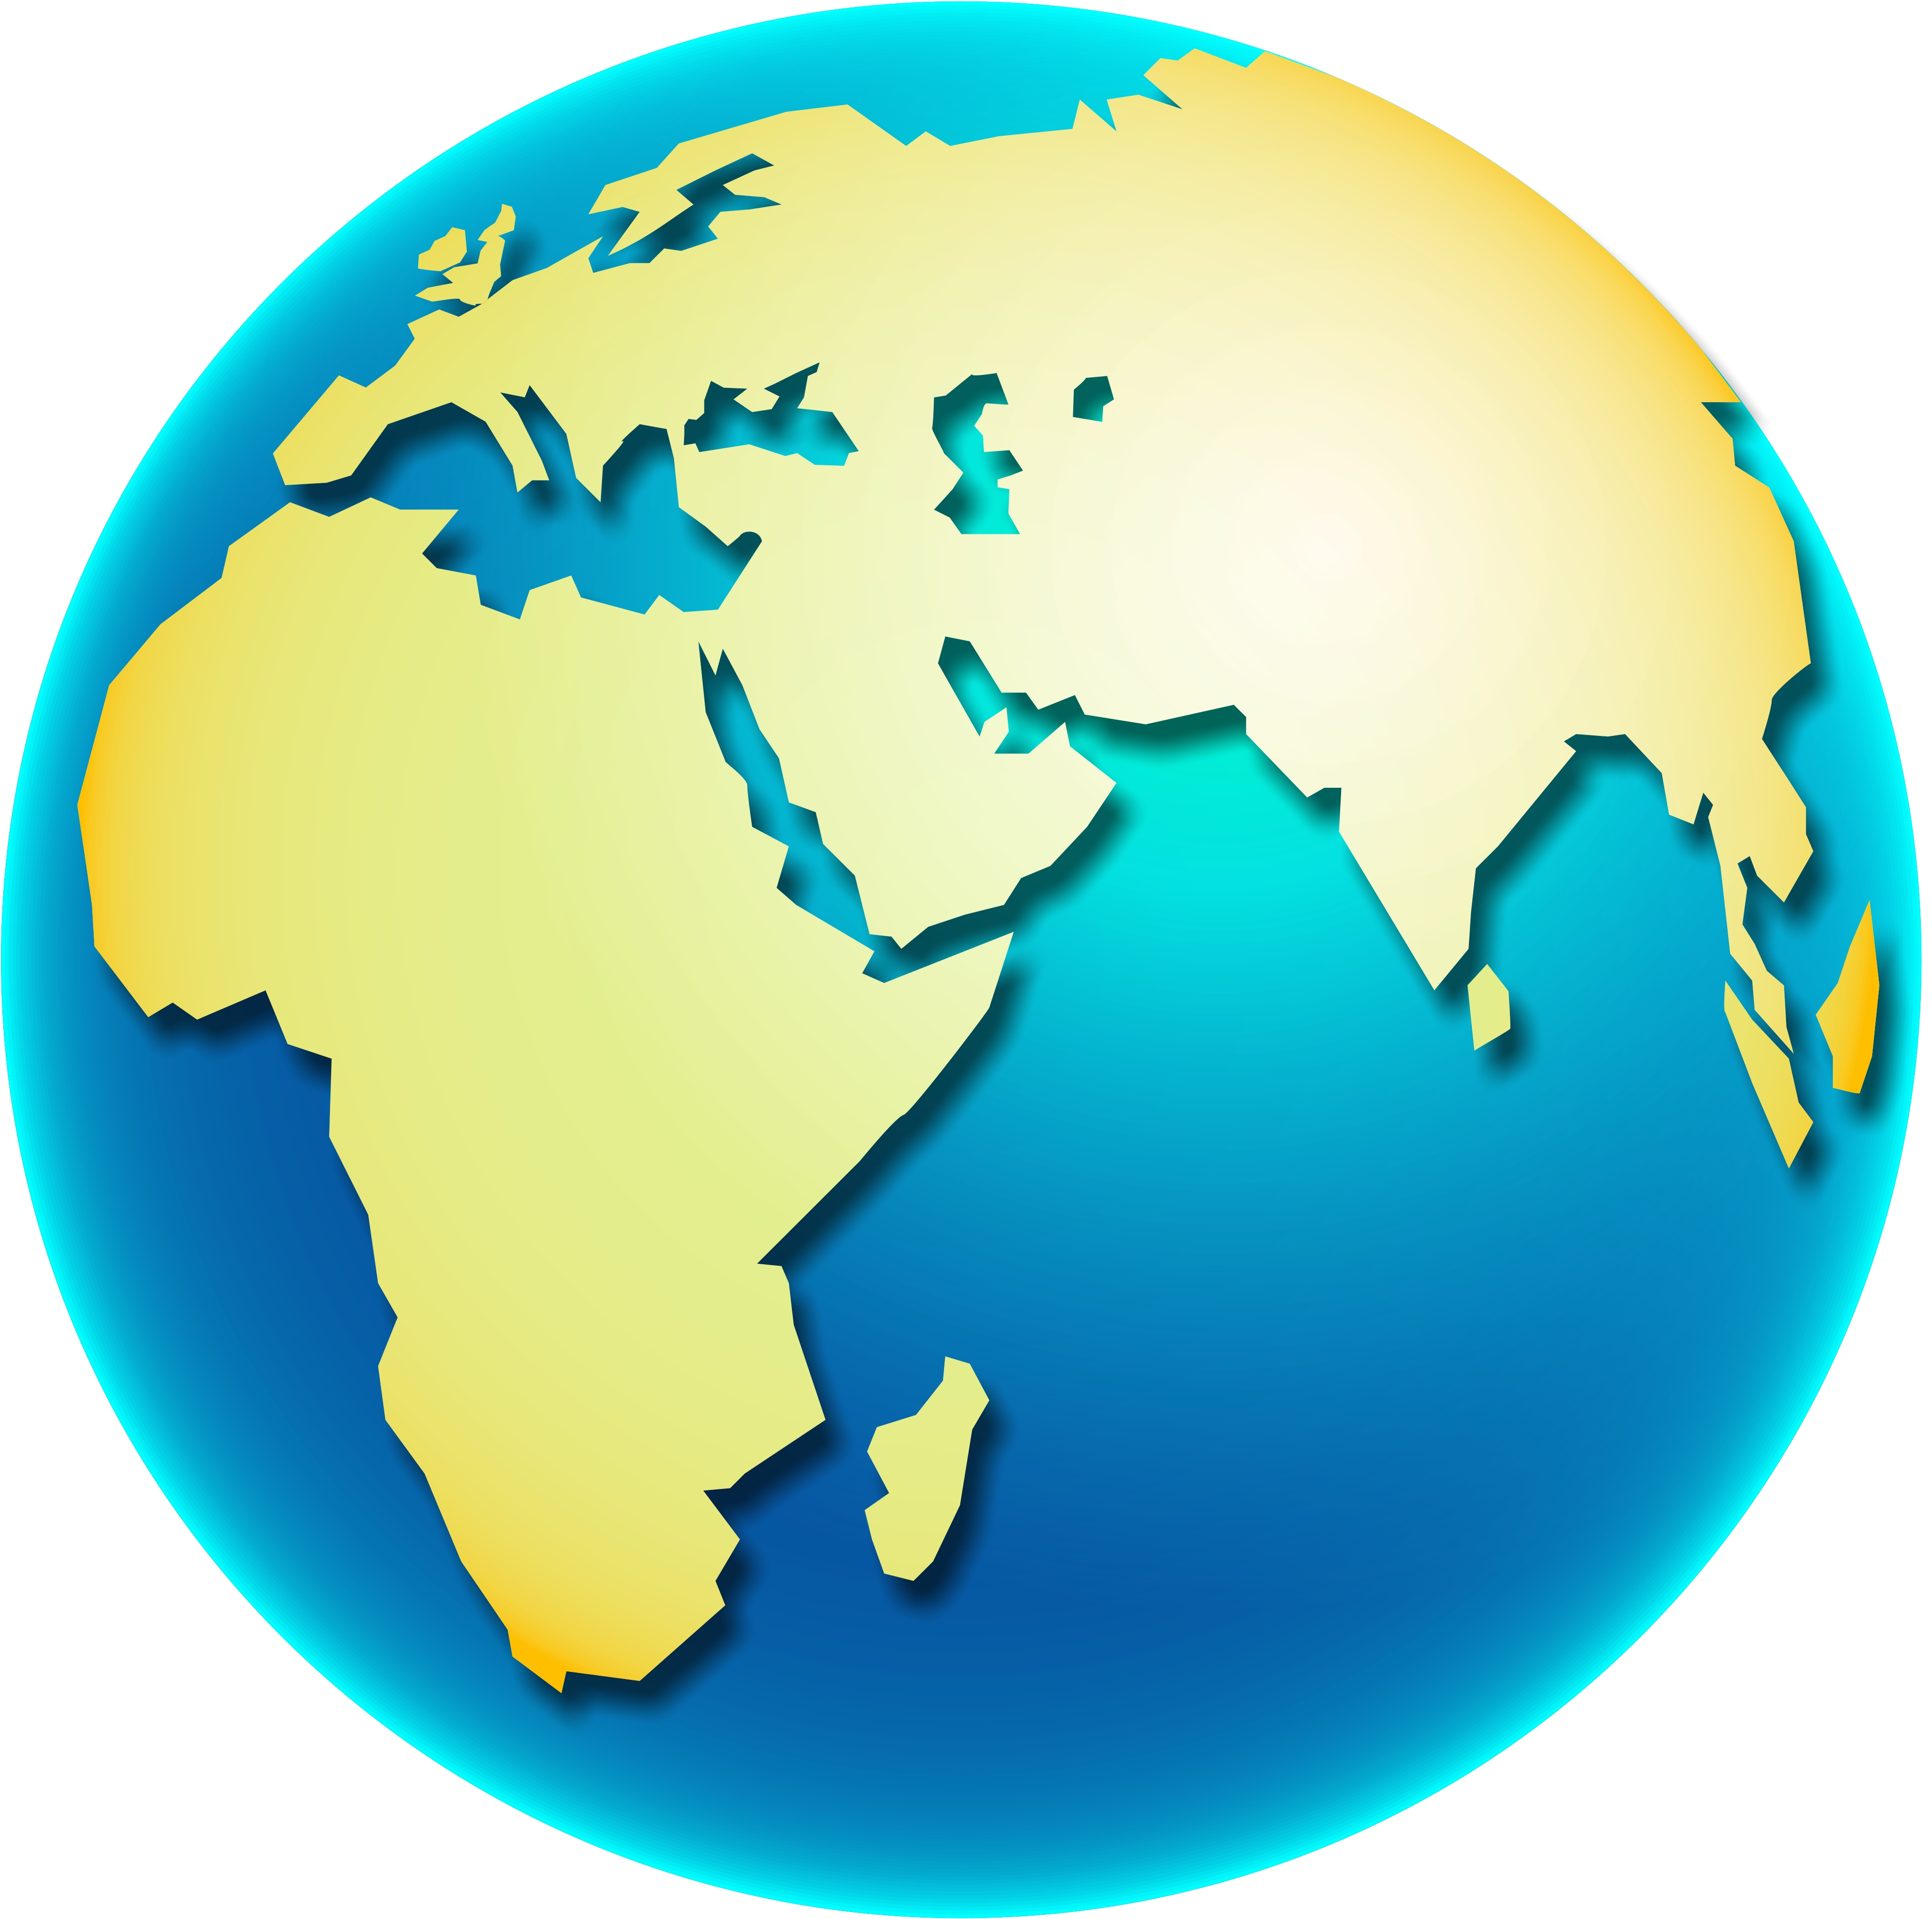 Earth globe clip art free clipart image 